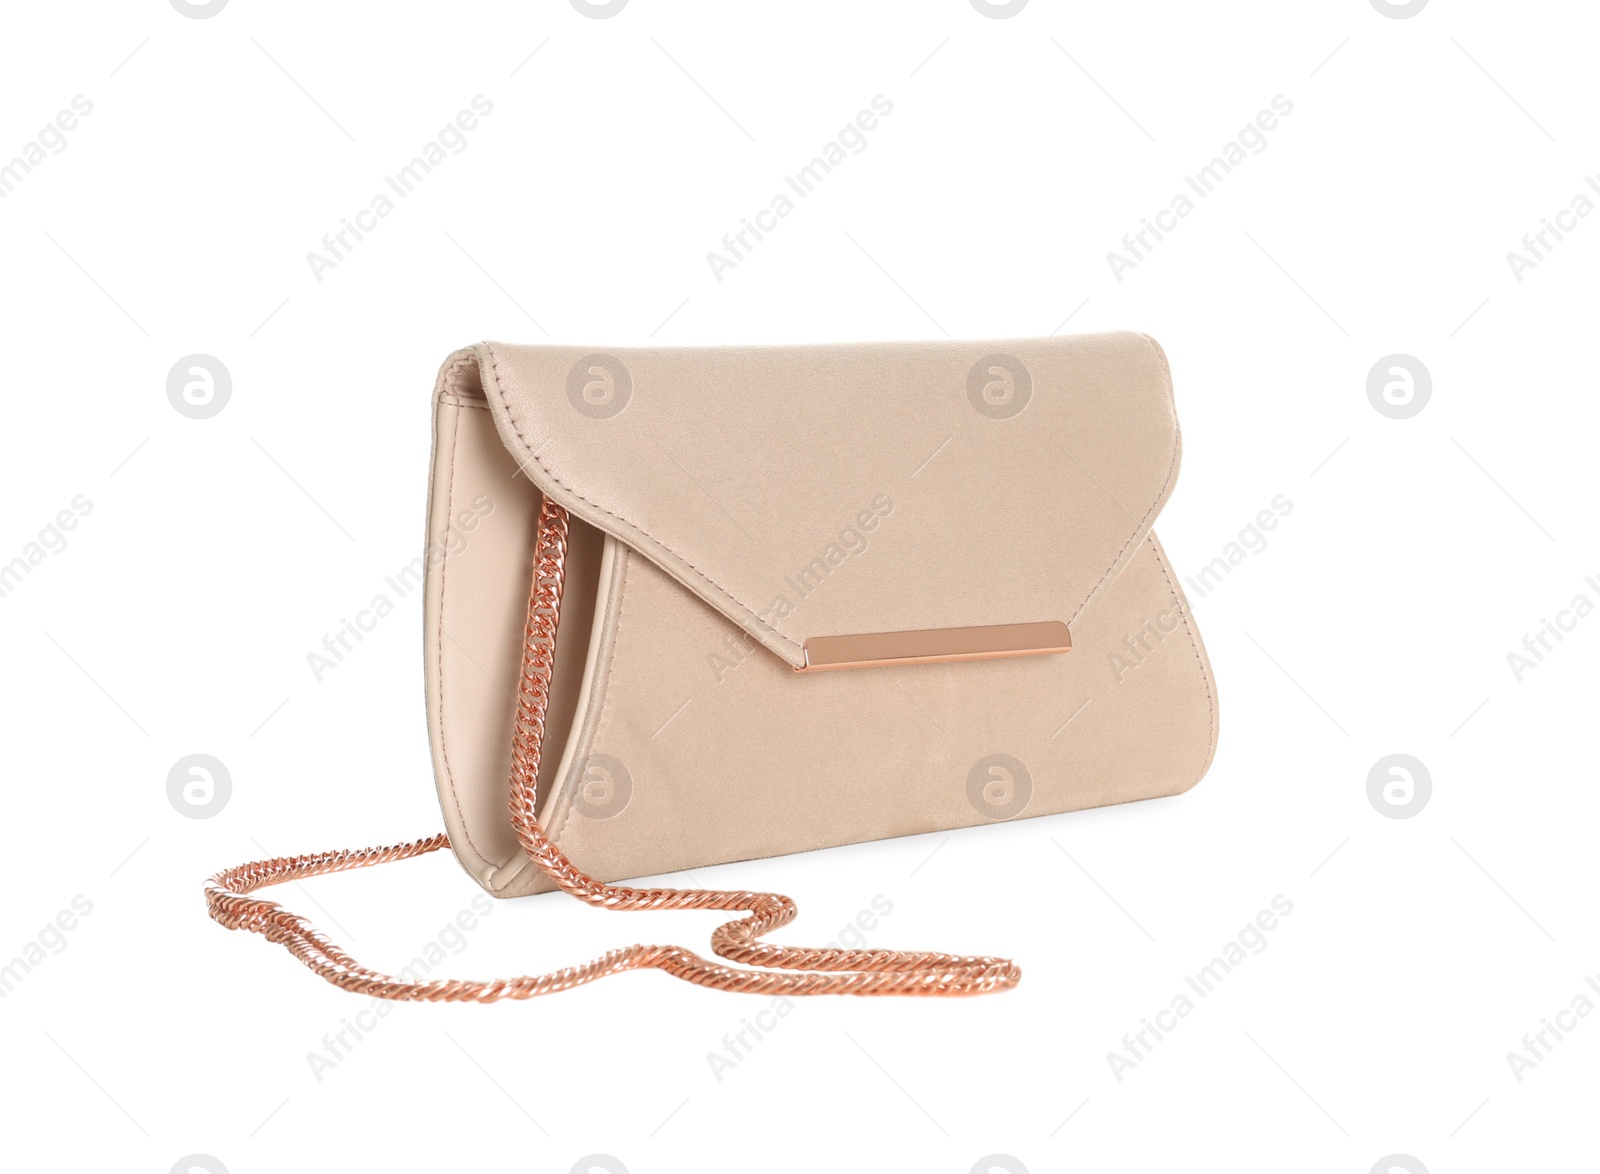 Photo of Stylish leather woman's bag isolated on white